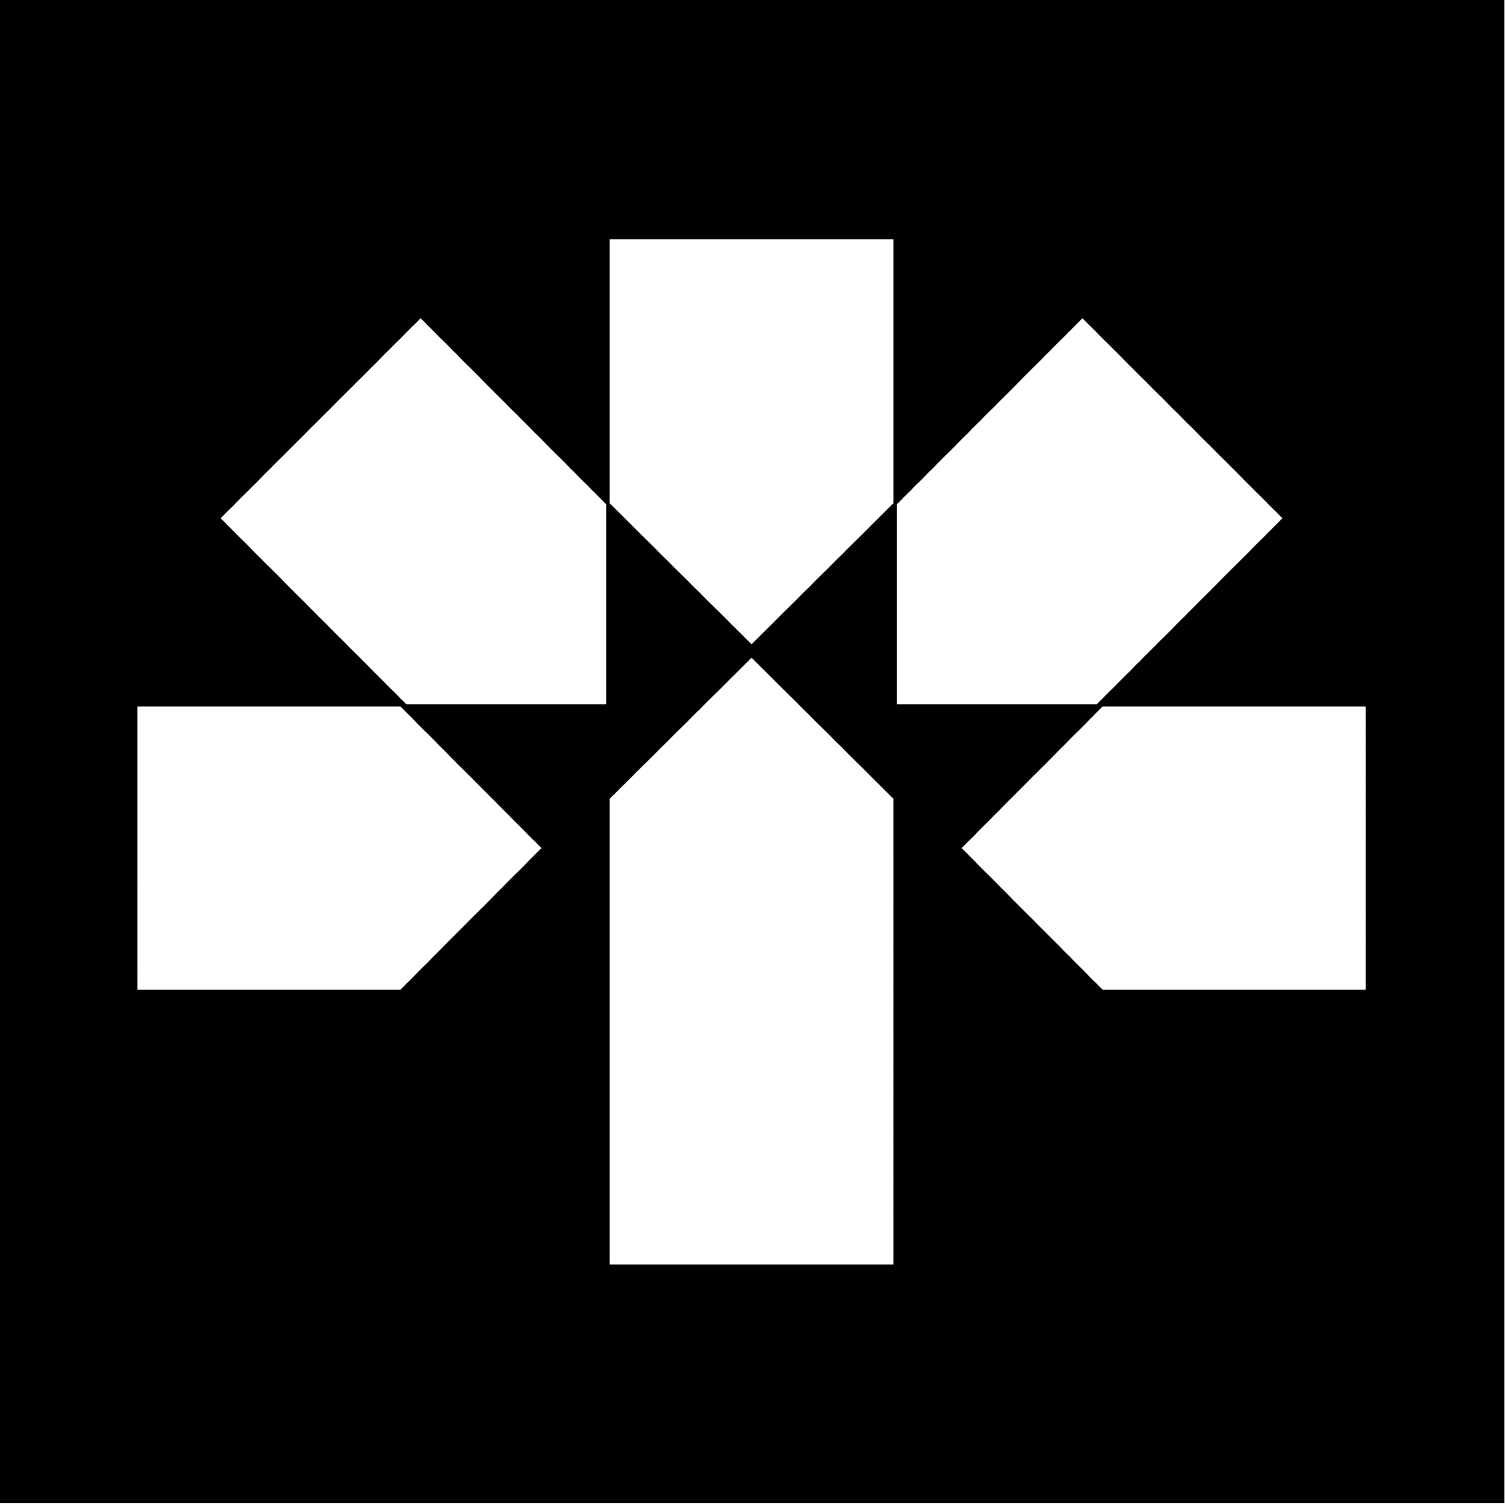 Laurentian Bank of Canada logo for dark backgrounds (transparent PNG)